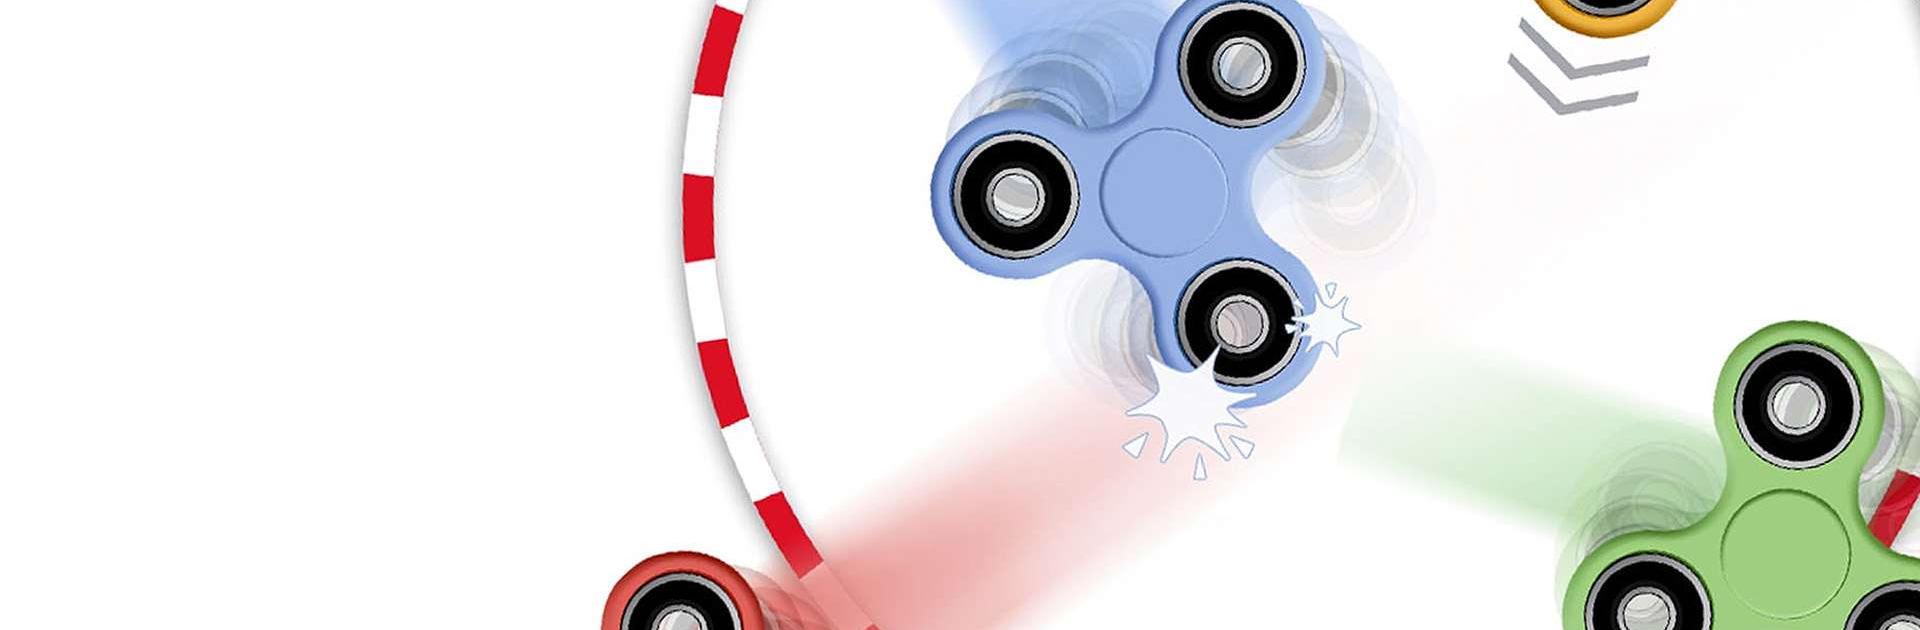 Play Fidget spinner multiplayers Online